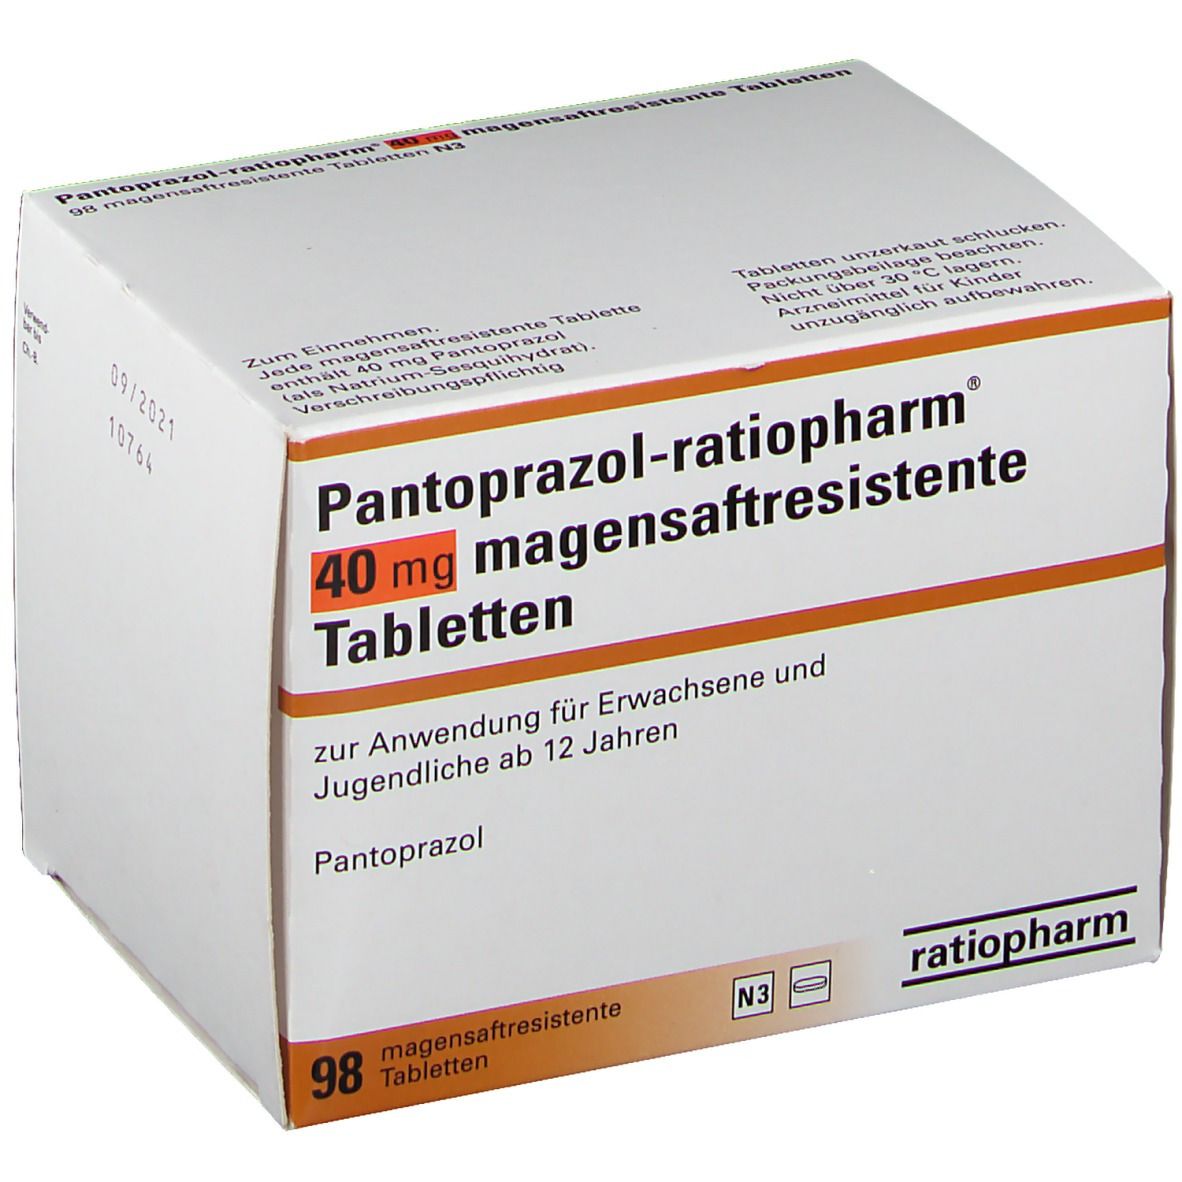 Pantoprazol-ratiopharm® 40 mg